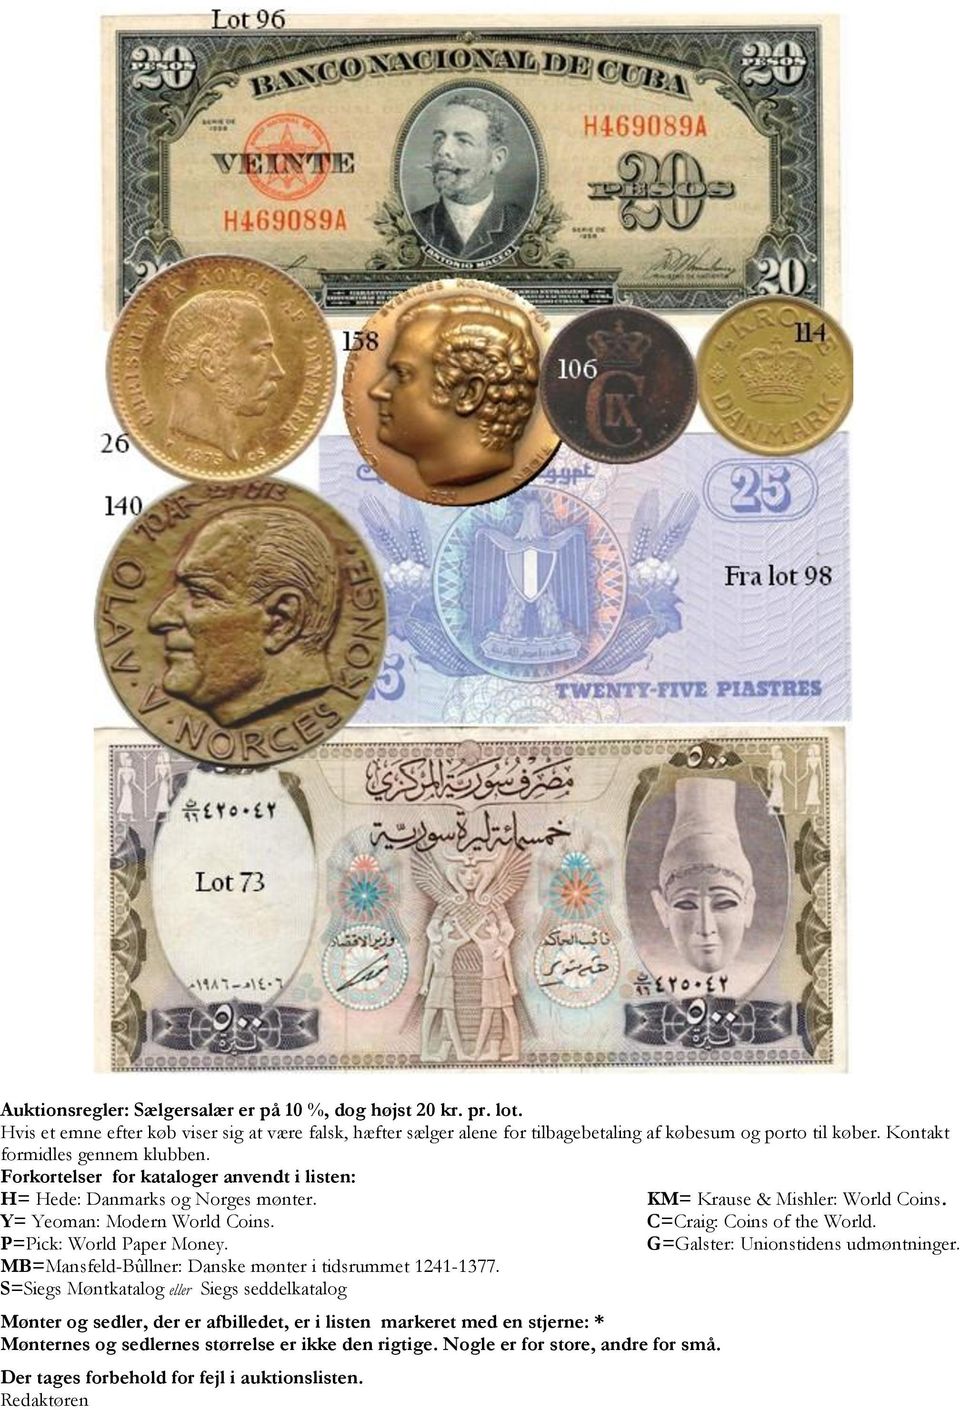 C=Craig: Coins of the World. P=Pick: World Paper Money. G=Galster: Unionstidens udmøntninger. MB=Mansfeld-Bûllner: Danske mønter i tidsrummet 1241-1377.